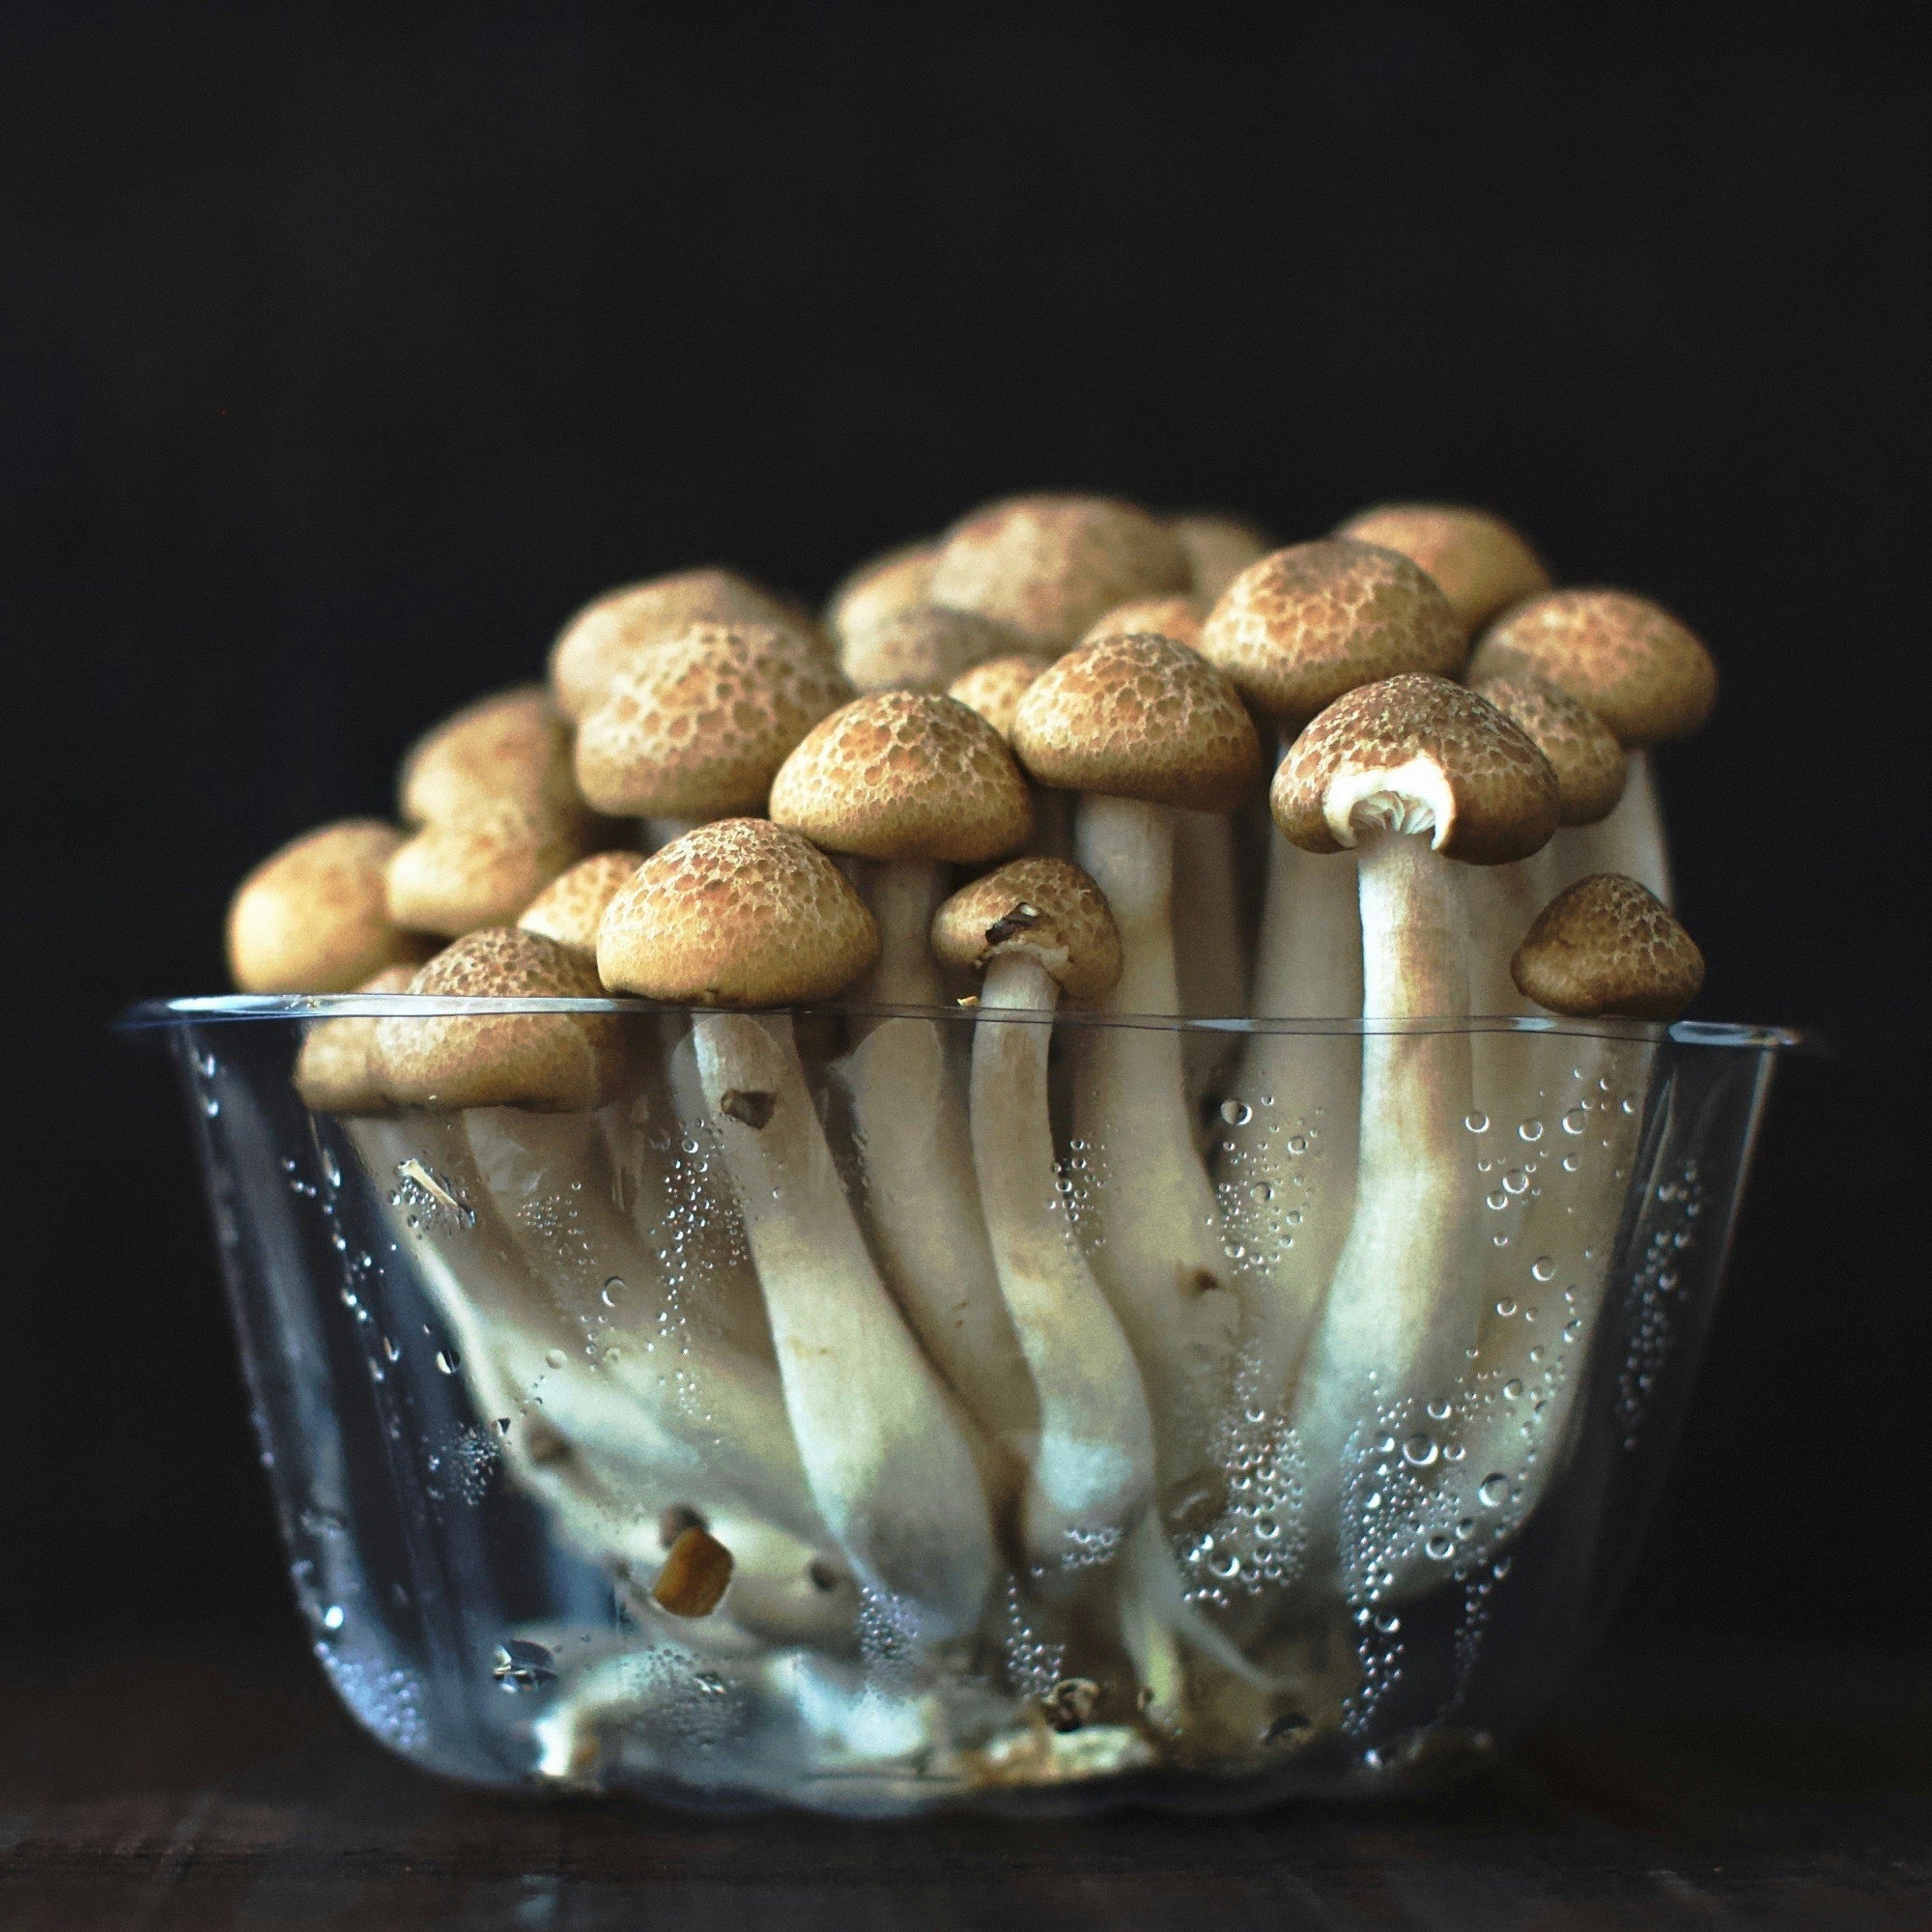 9 Creative and Tasty Ways to Preserve Mushrooms